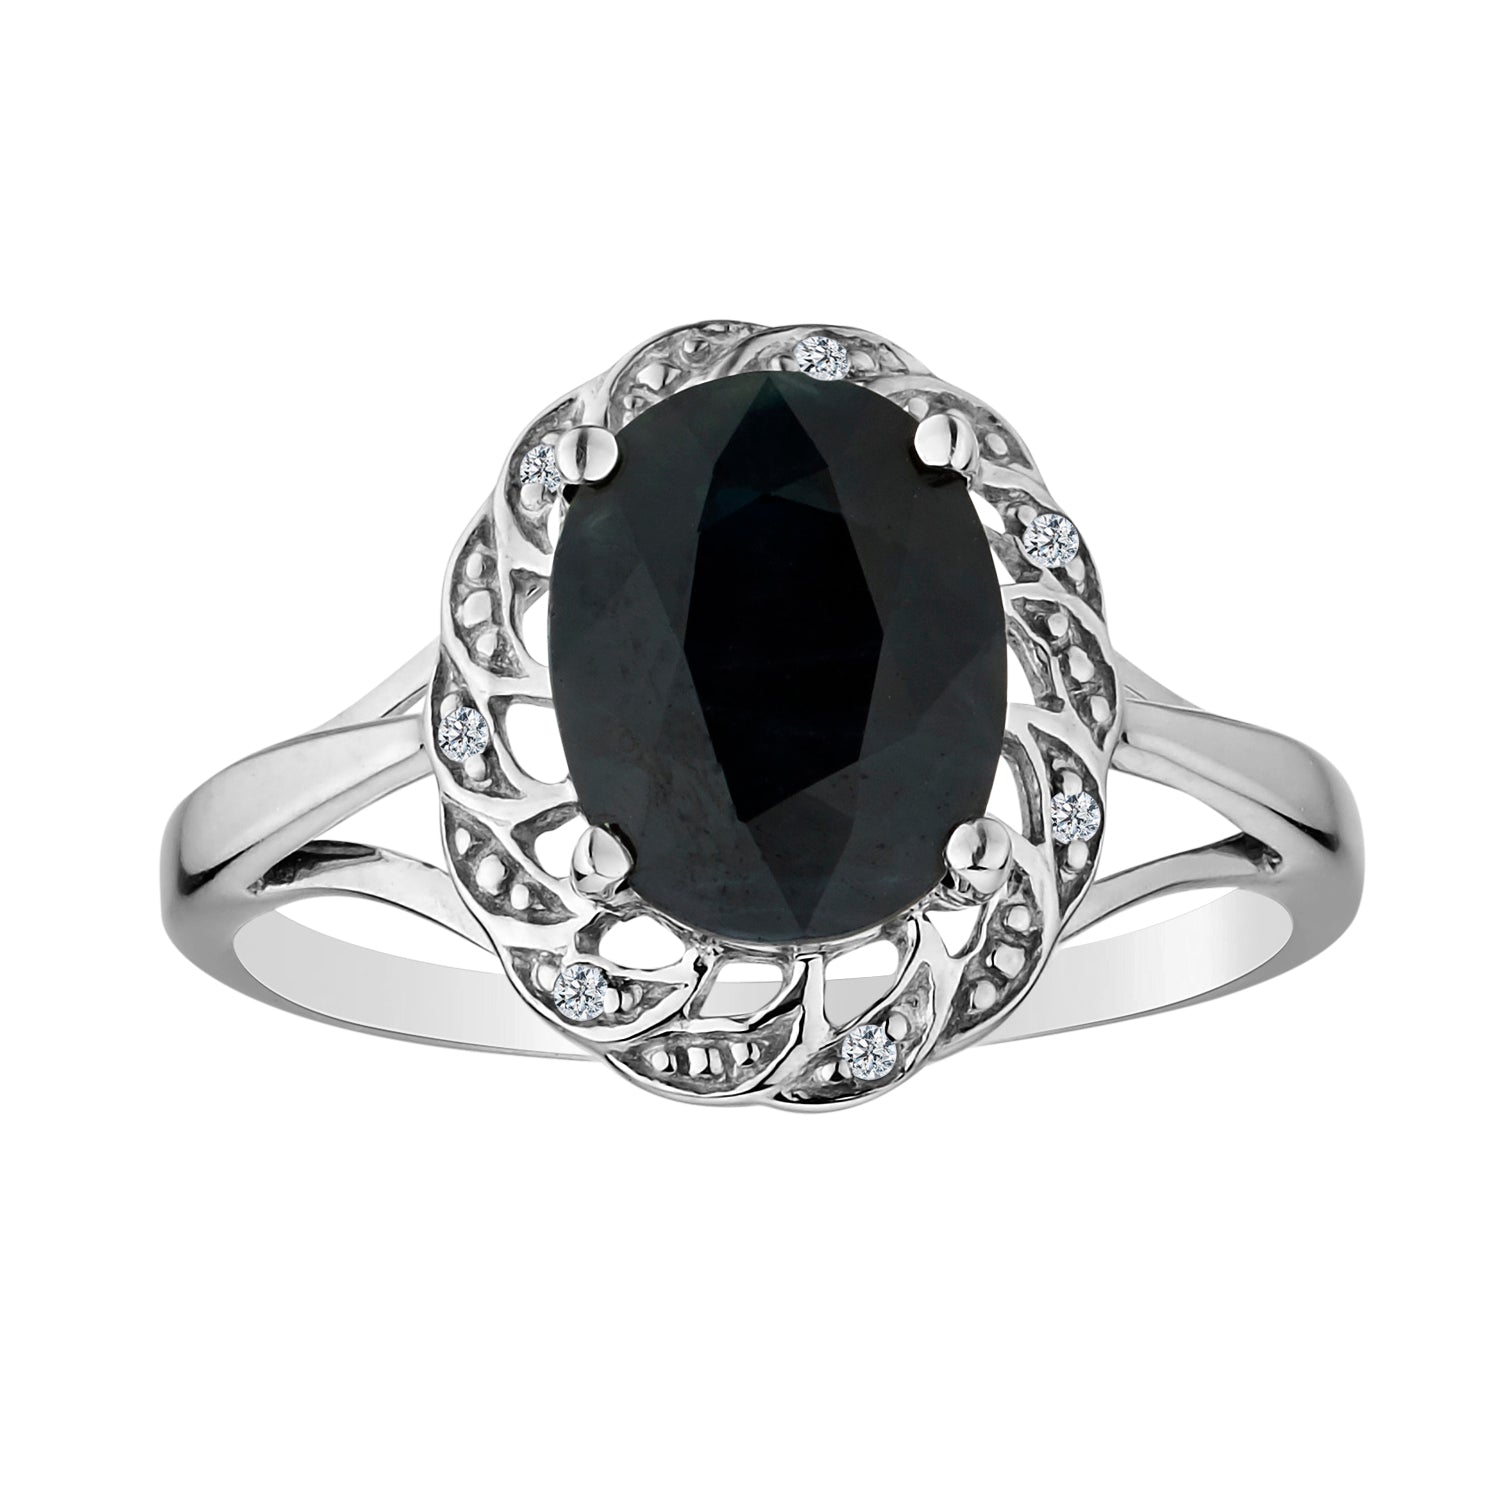 Concord Princess Cut Black Diamond Ring by Nick Engel - Gem Breakfast